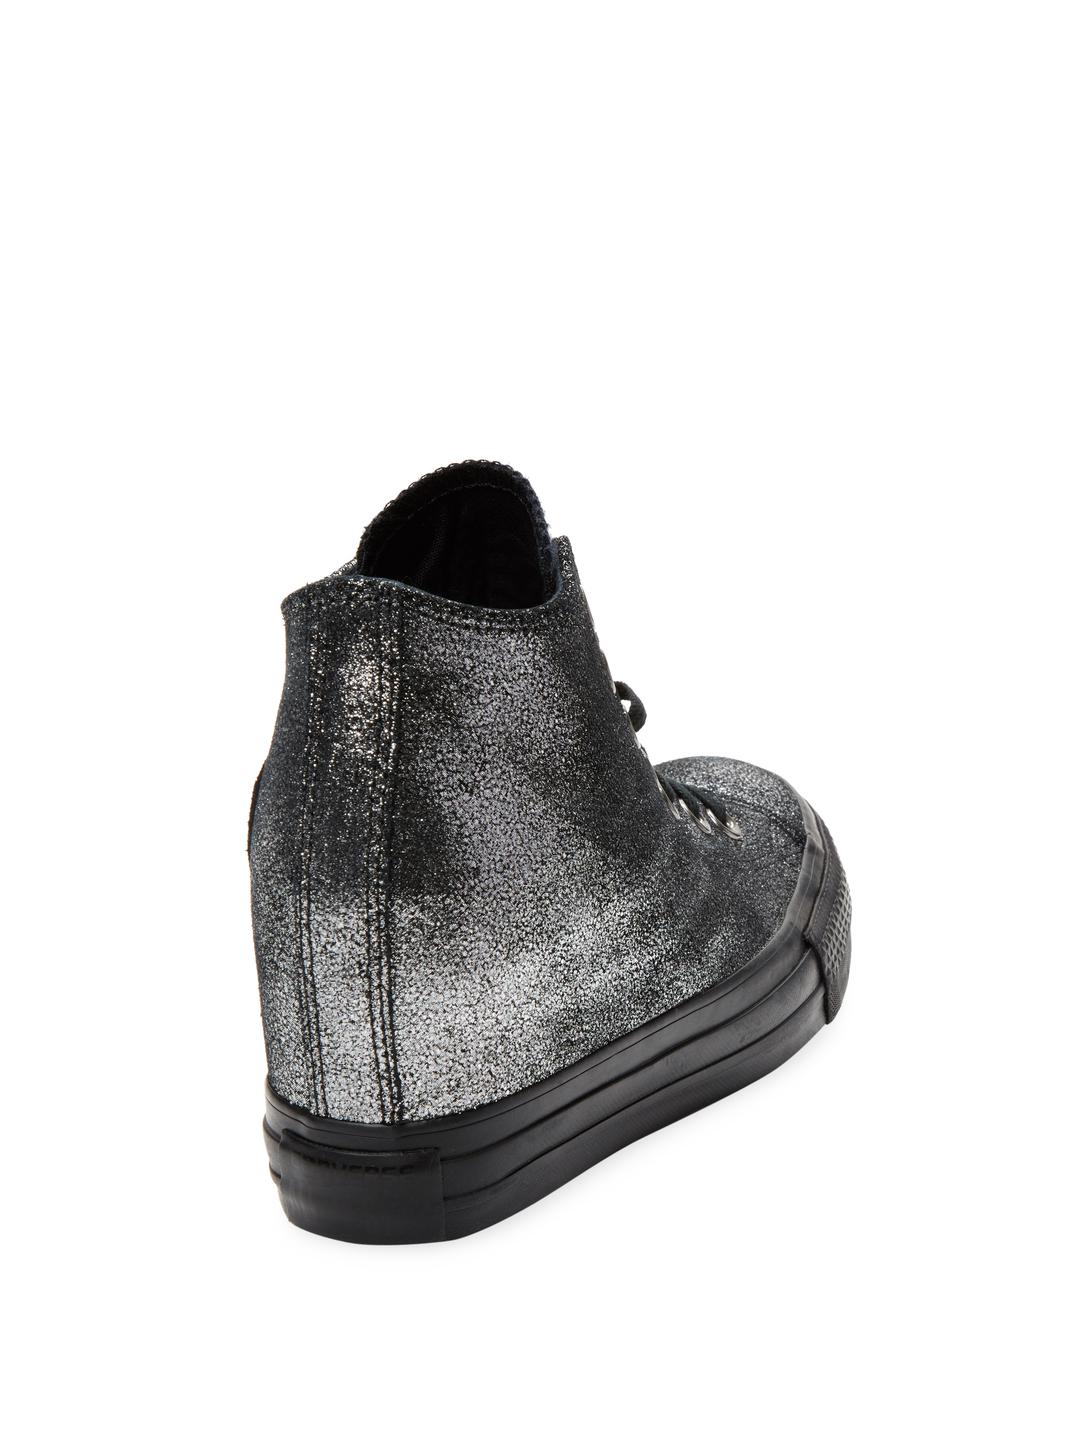 Converse Leather Chuck Taylor Lux Hidden Wedge Sneaker in  Silver/Black/Black (Black) | Lyst